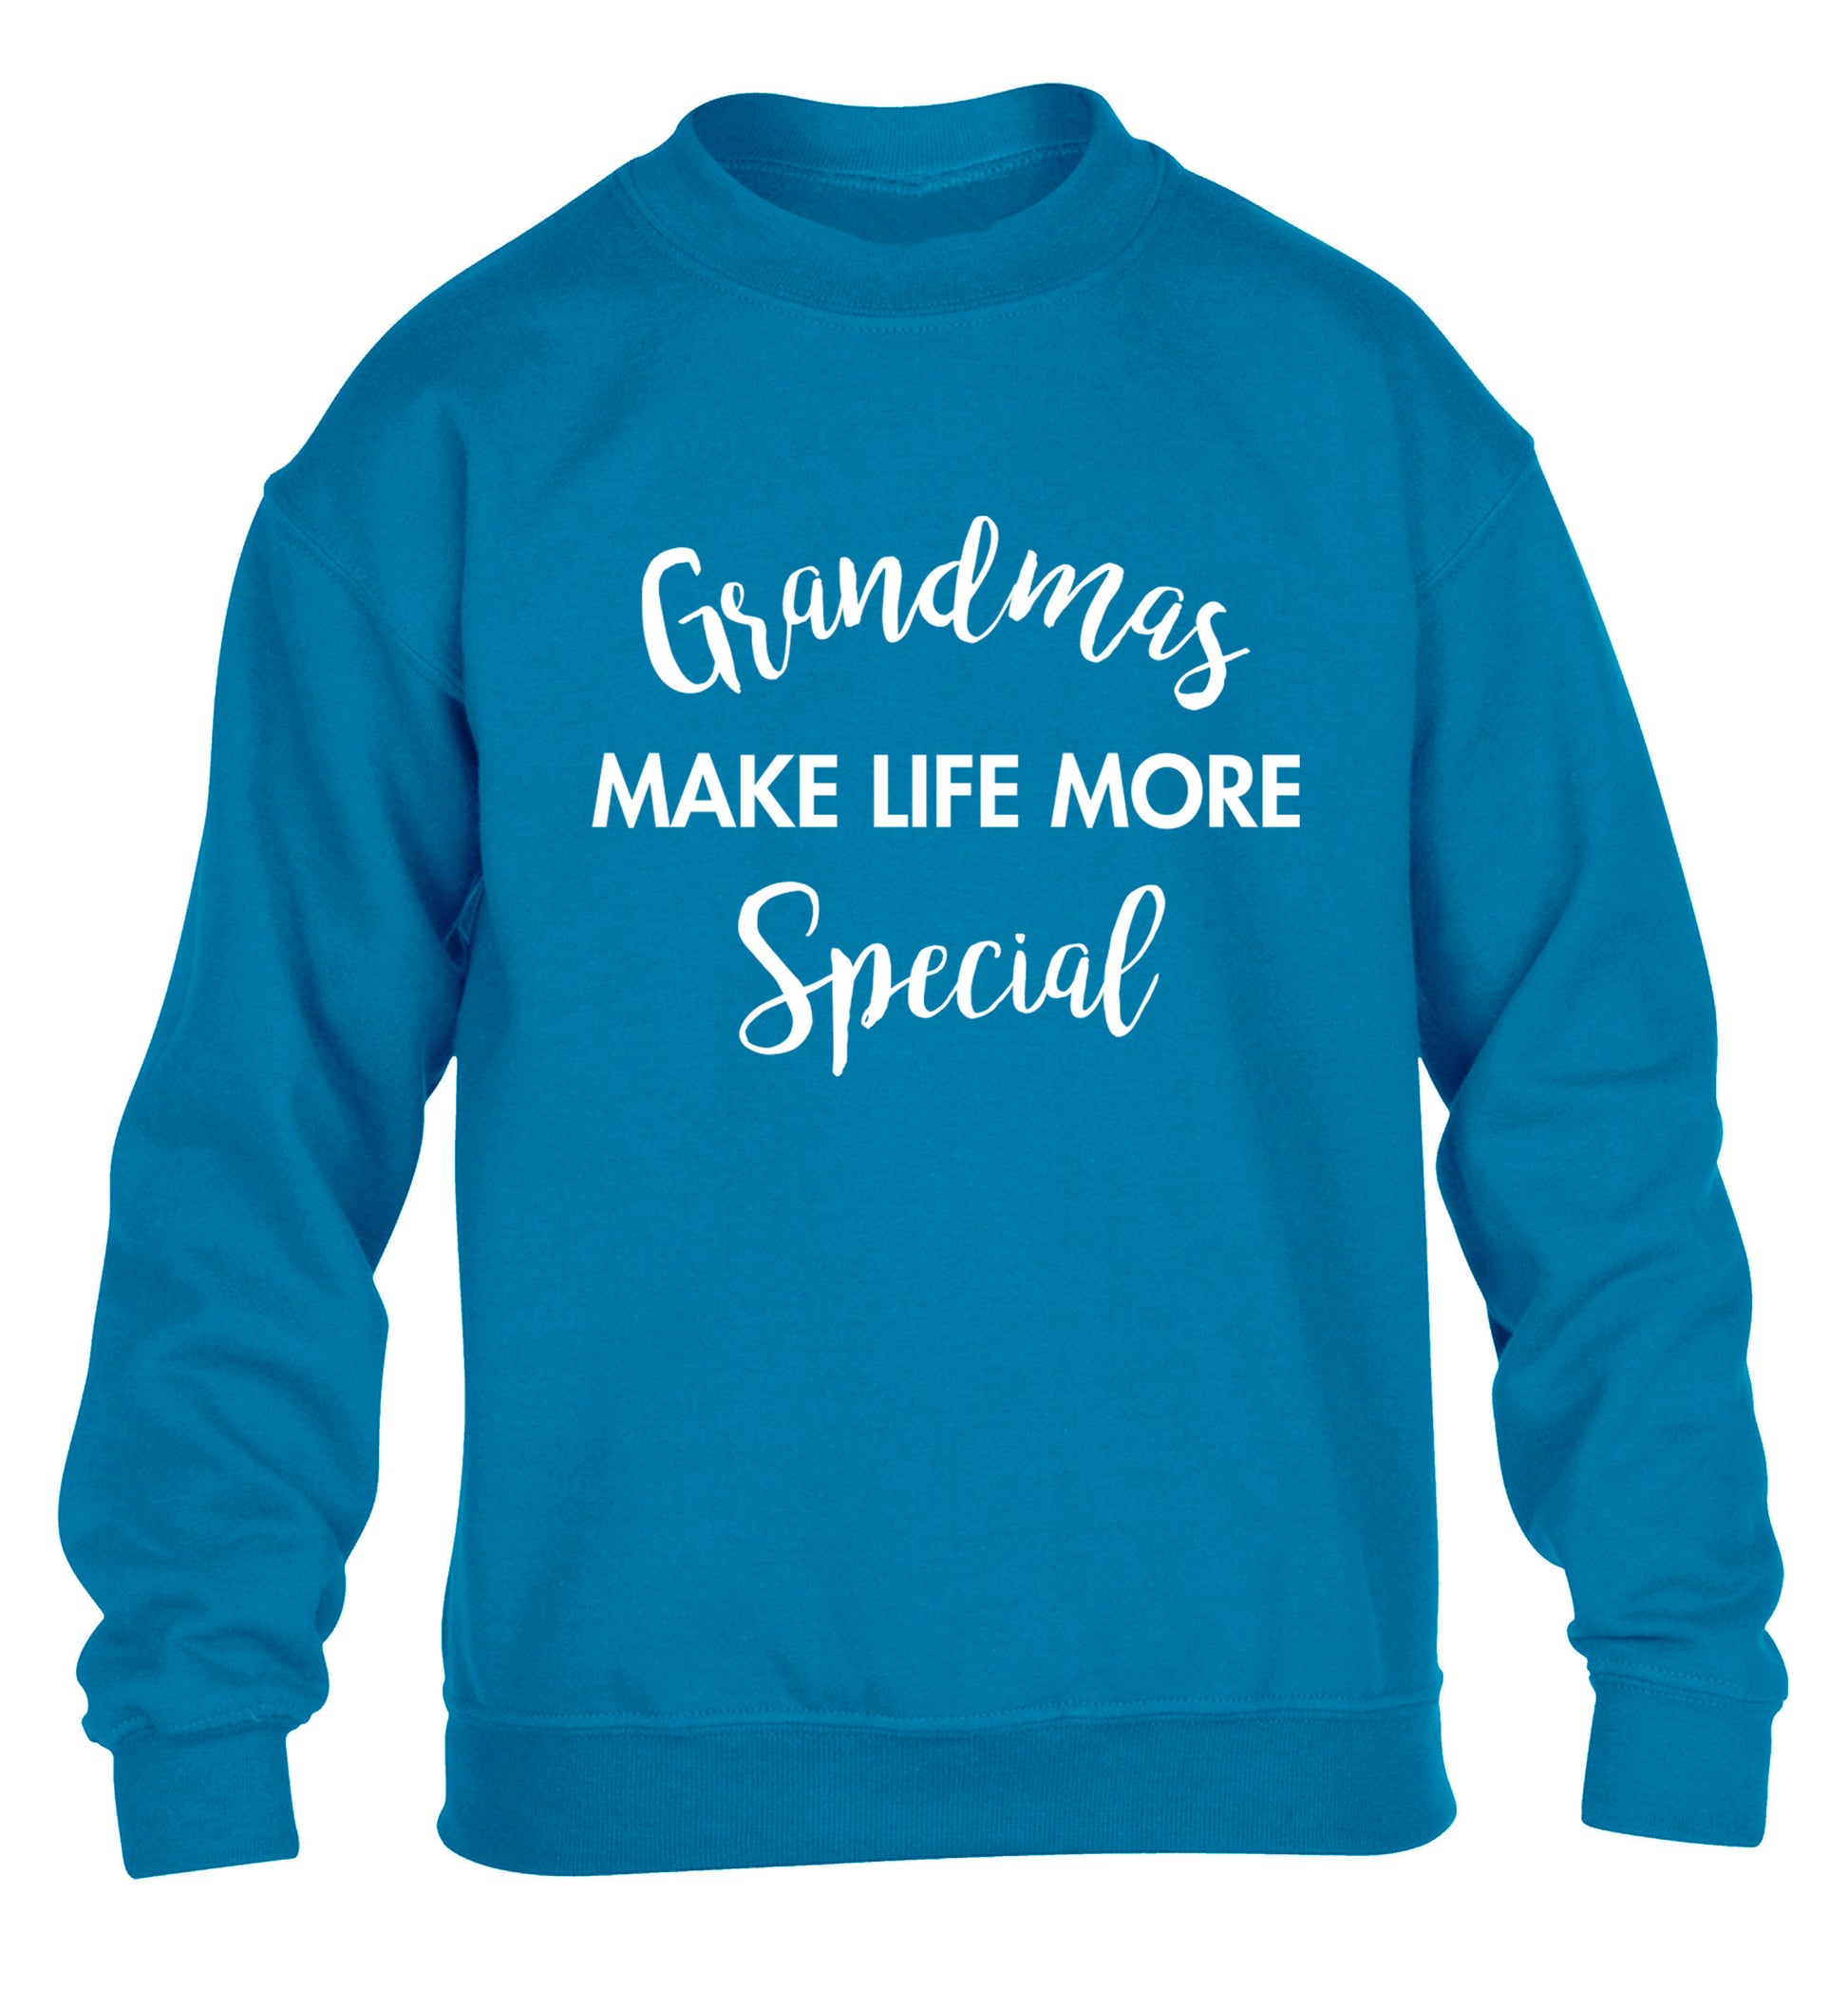 Grandmas make life more special children's blue sweater 12-14 Years